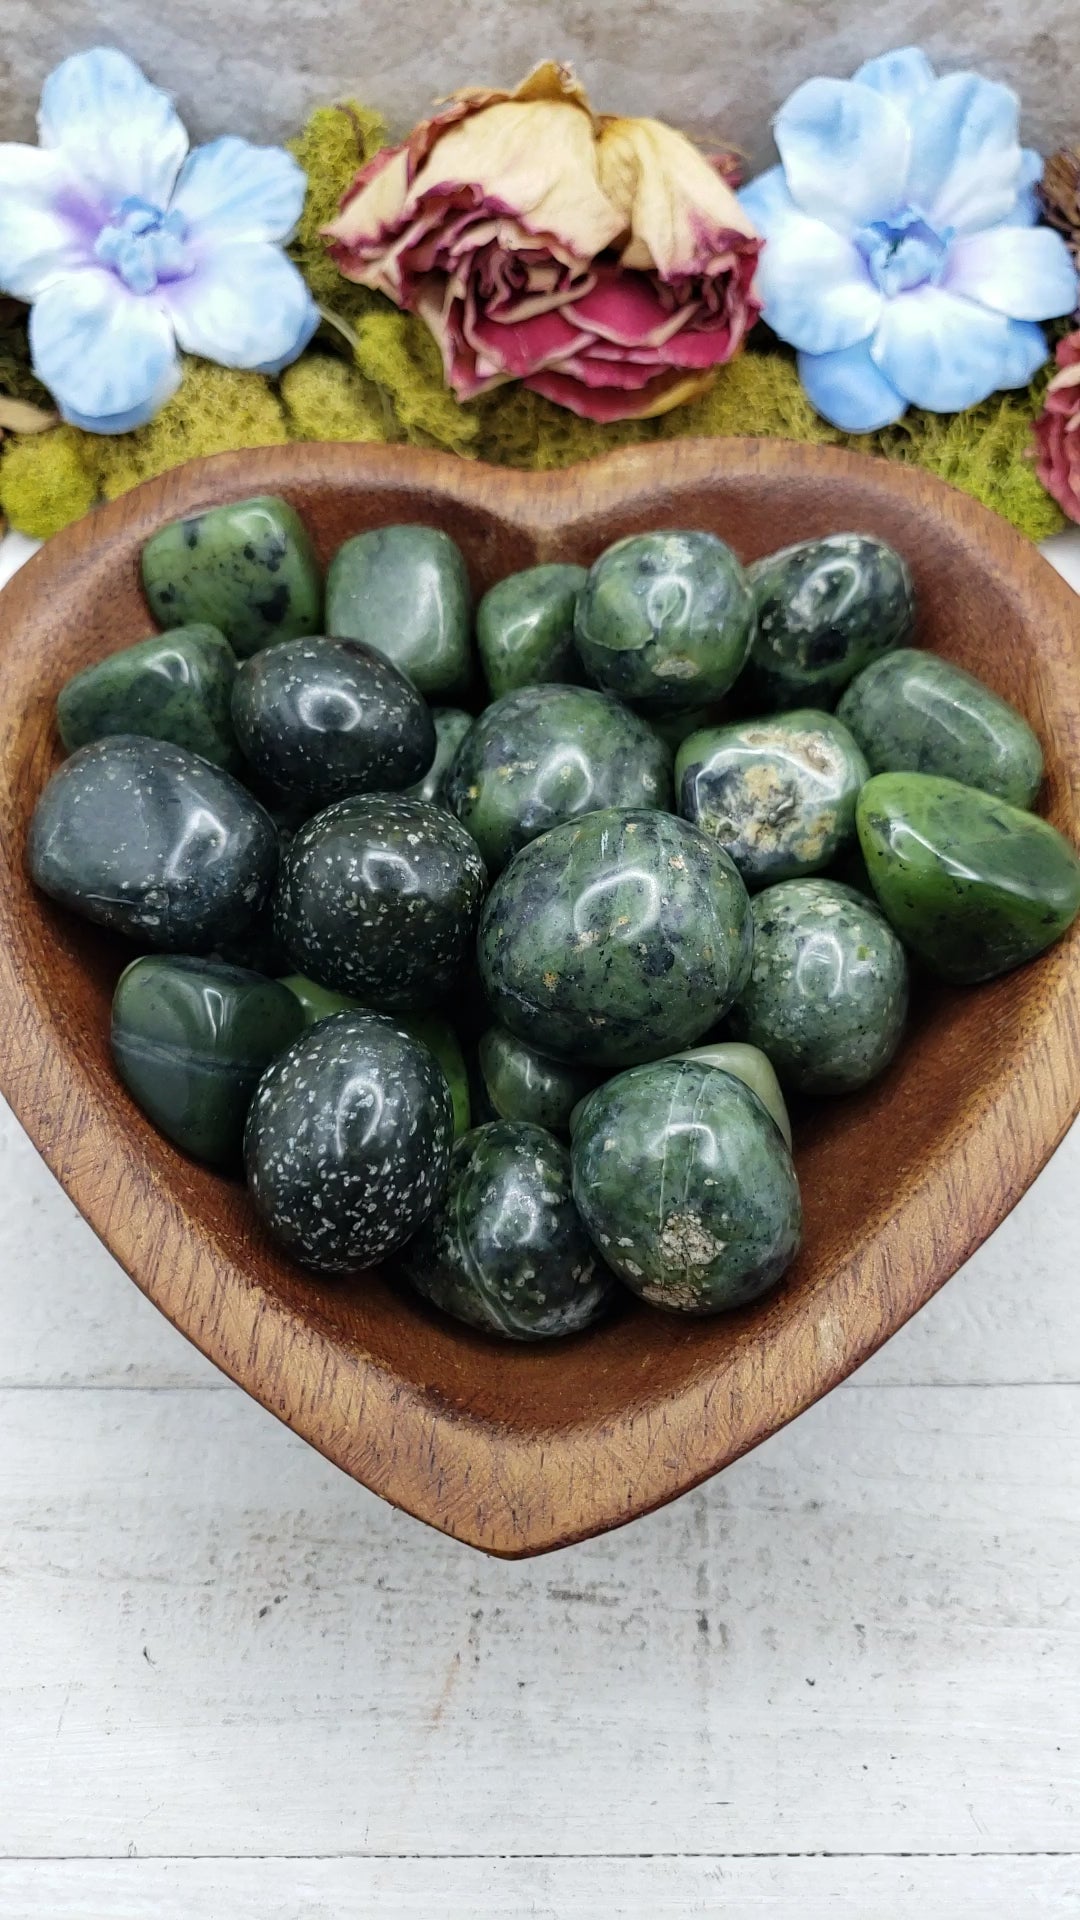 nephrite jade stones in heart-shaped bowl